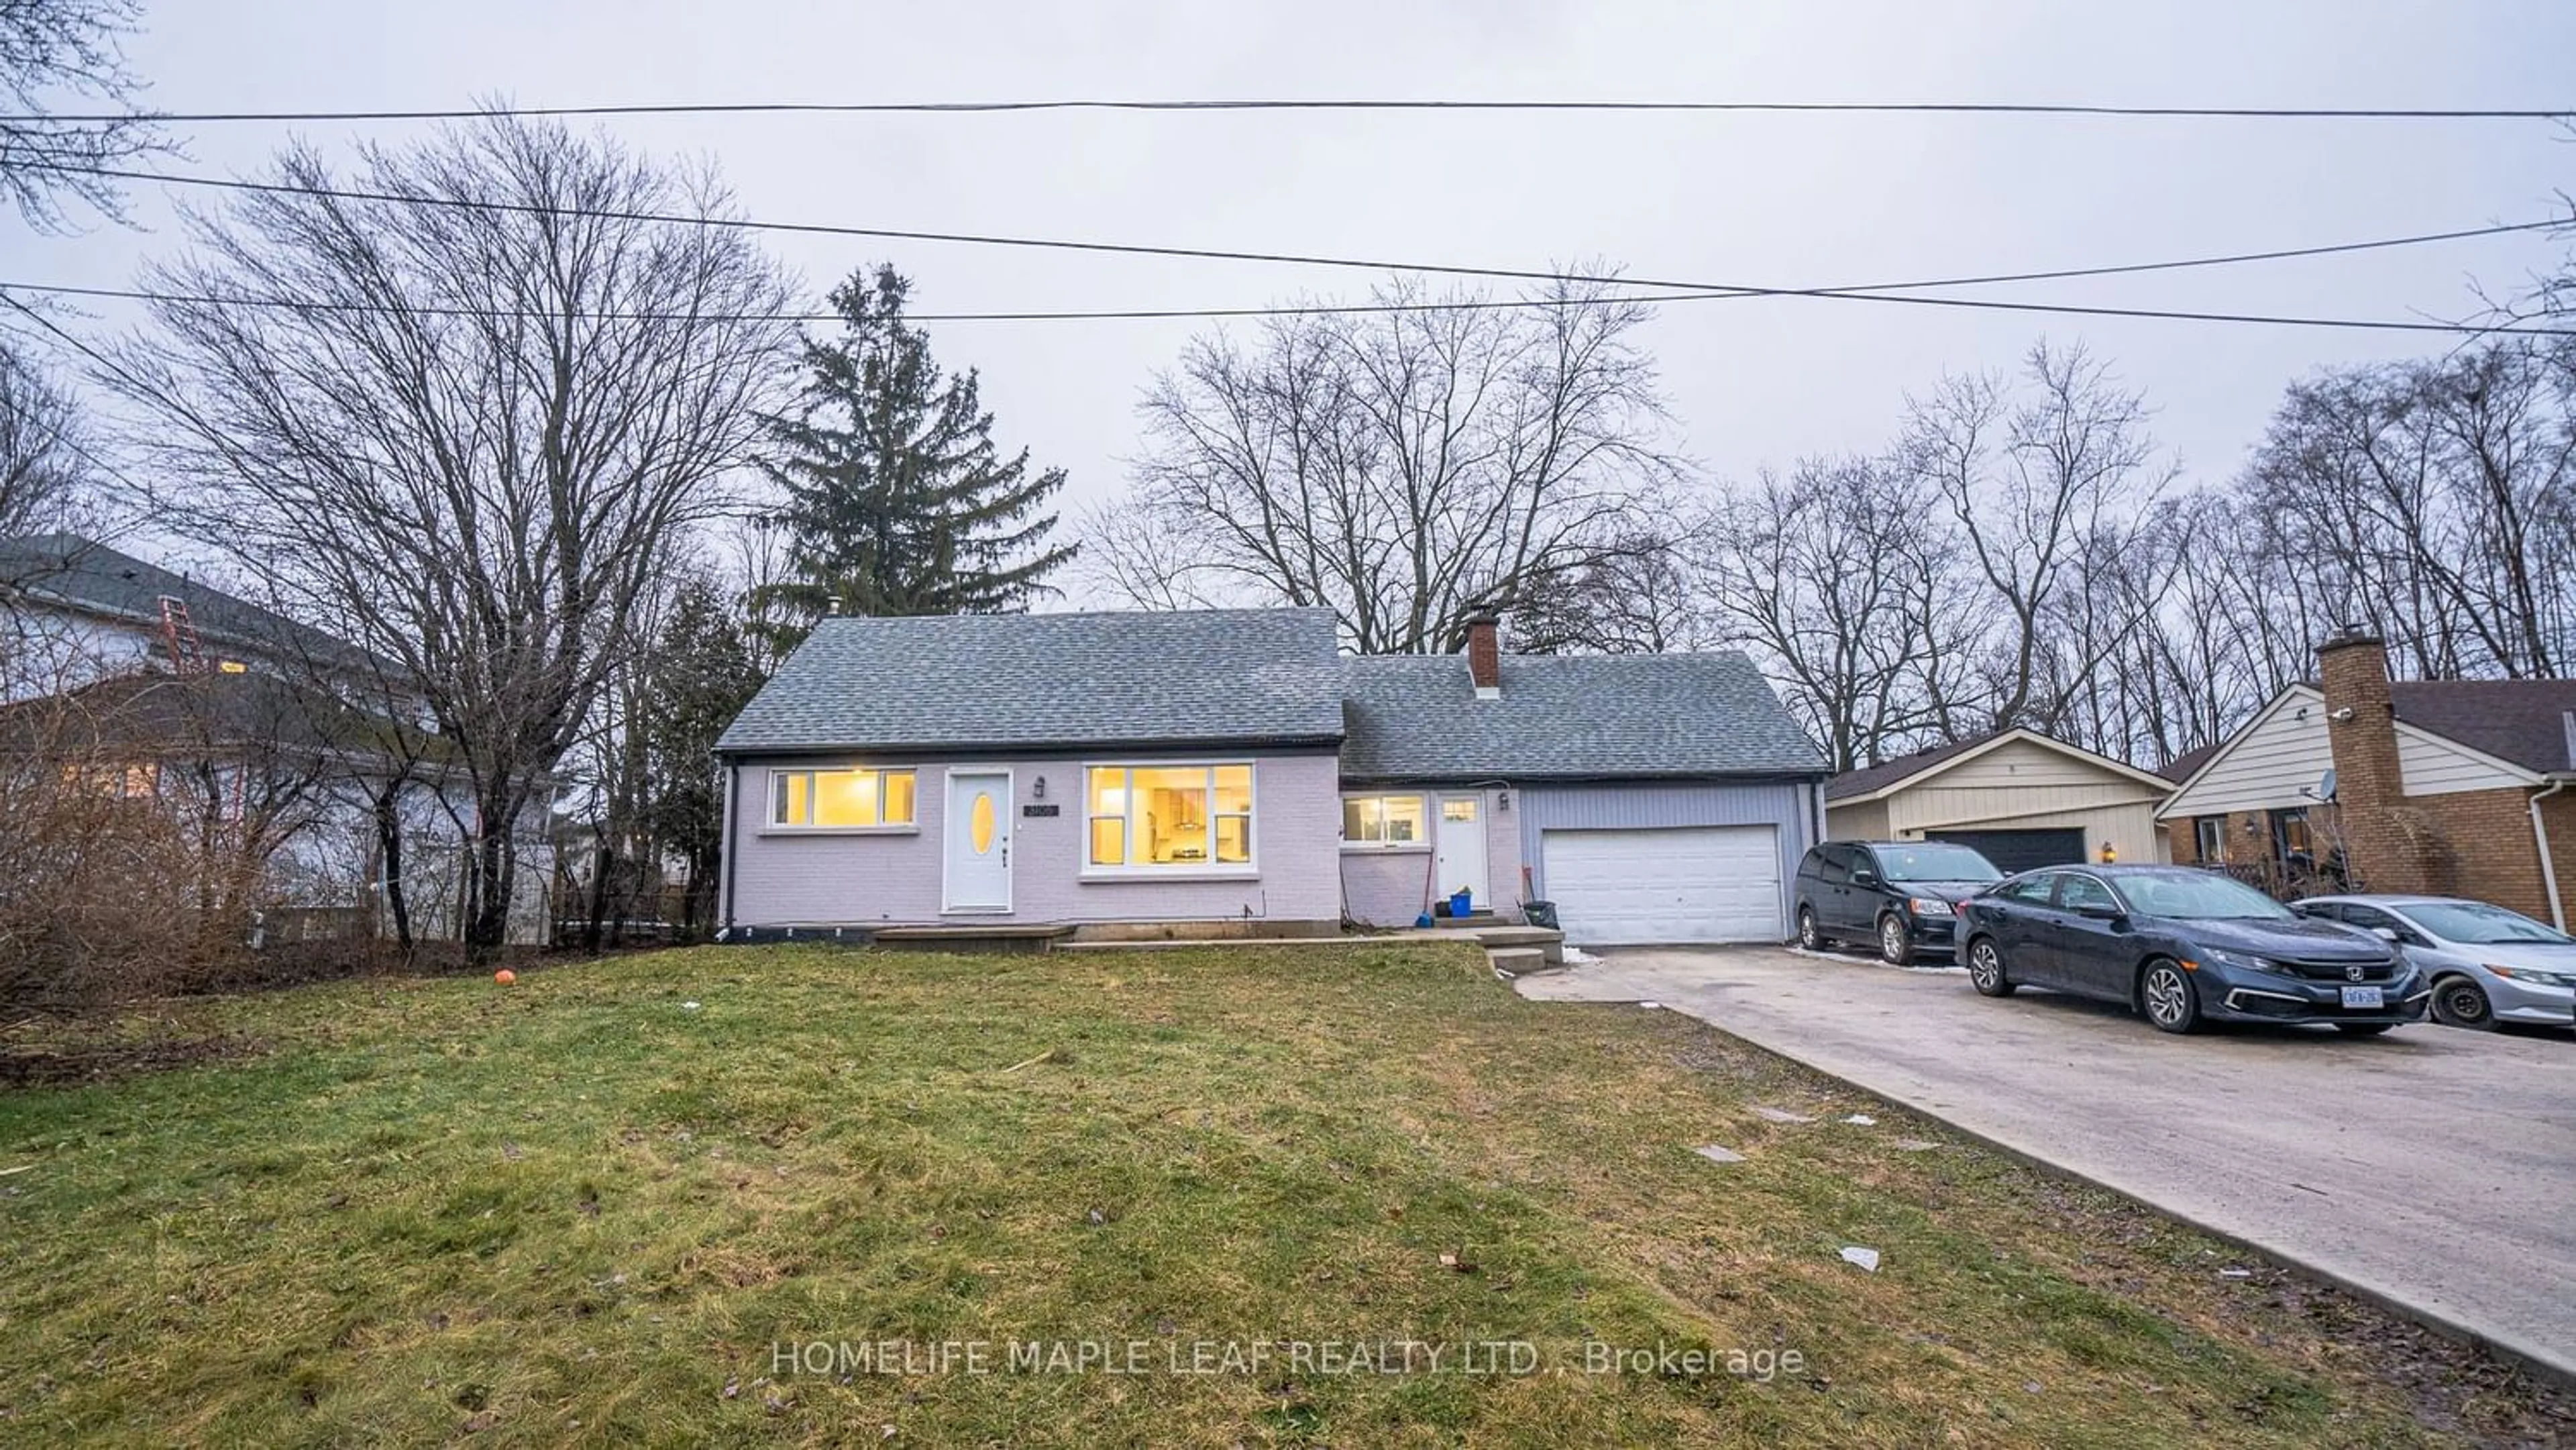 Frontside or backside of a home for 3105 White Oak Rd, London Ontario N6E 1L7